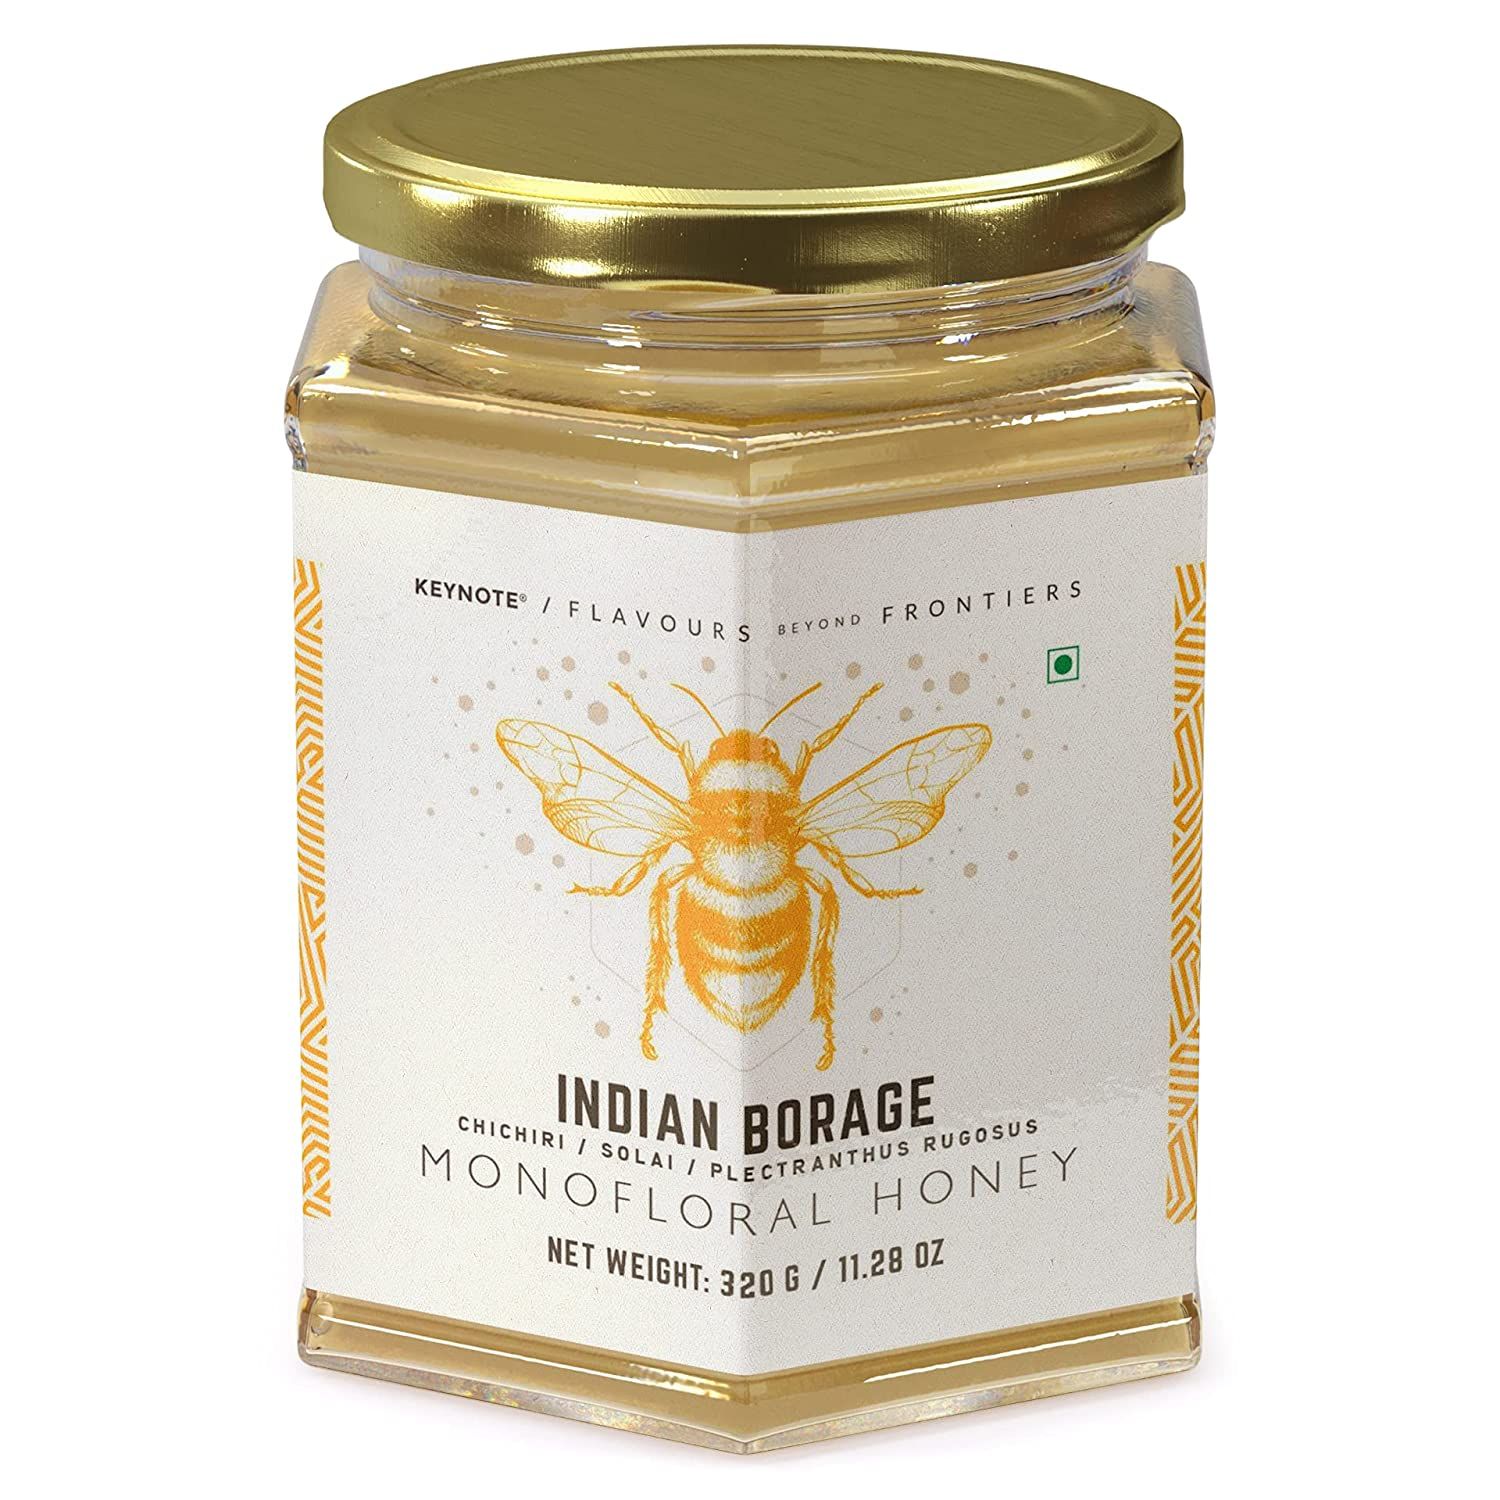 Keynote Indian Borage Multifloral Honey Image